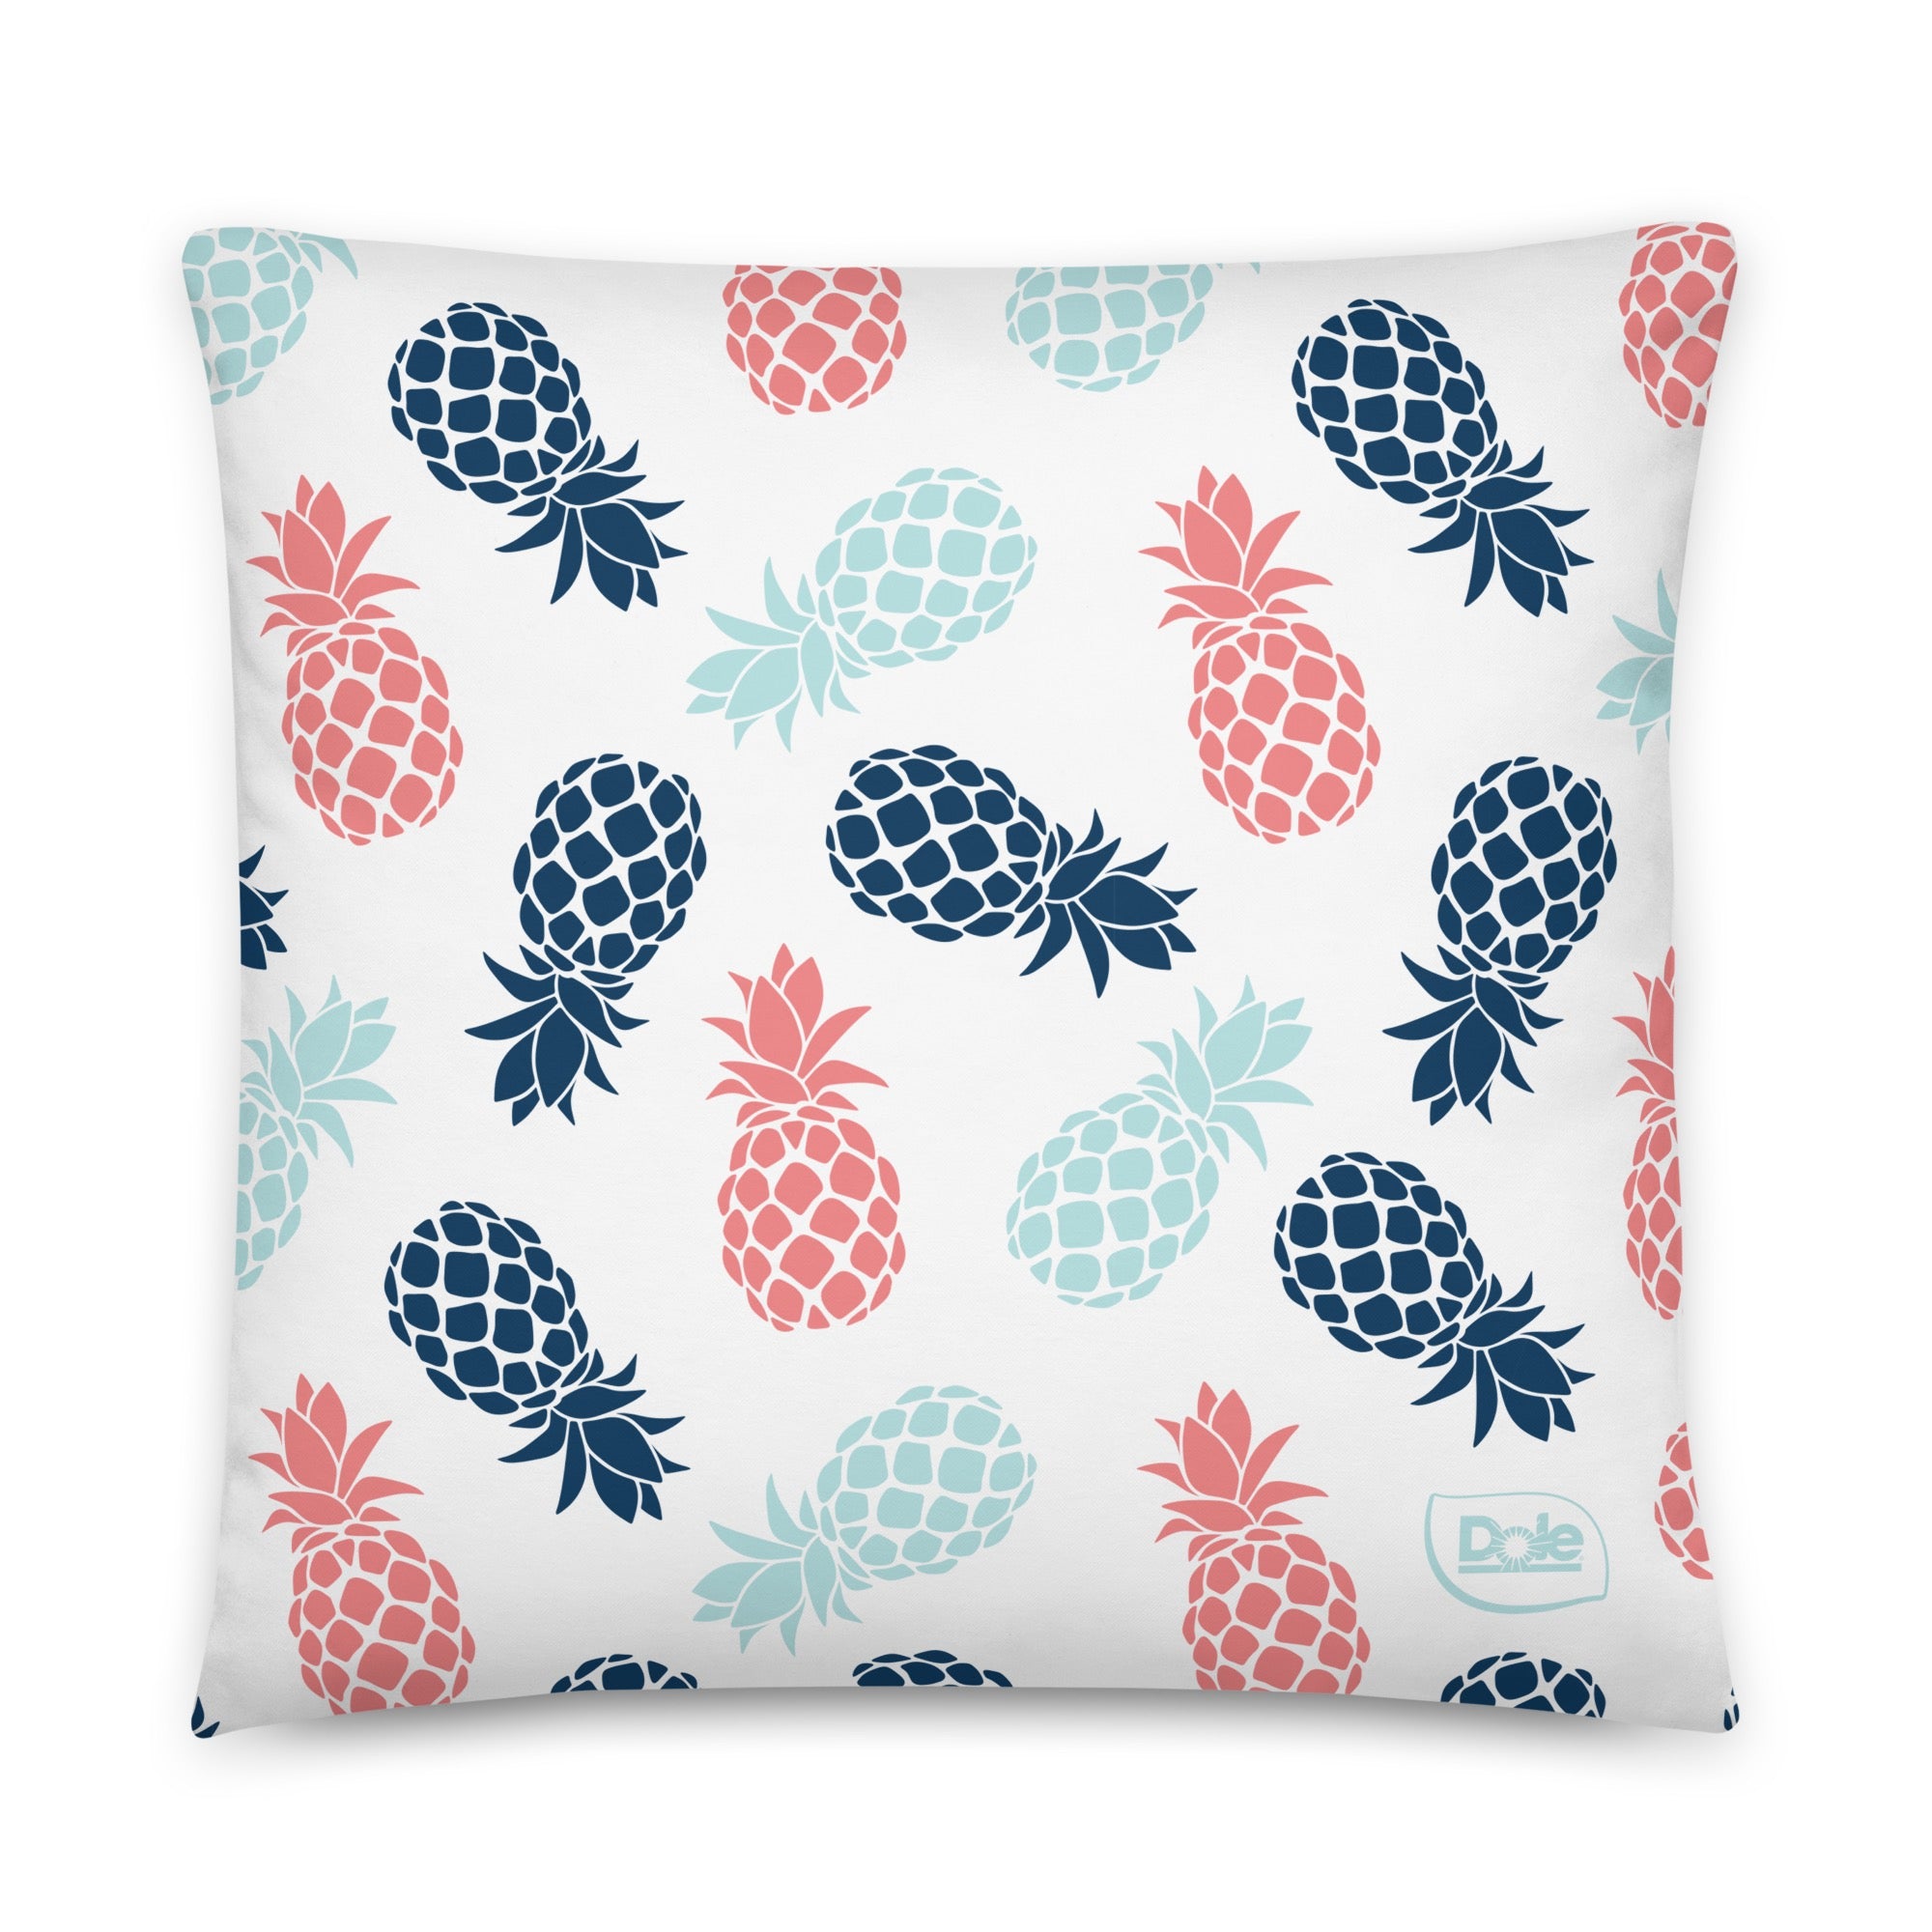 Dole Pineapple Throw Pillow-3